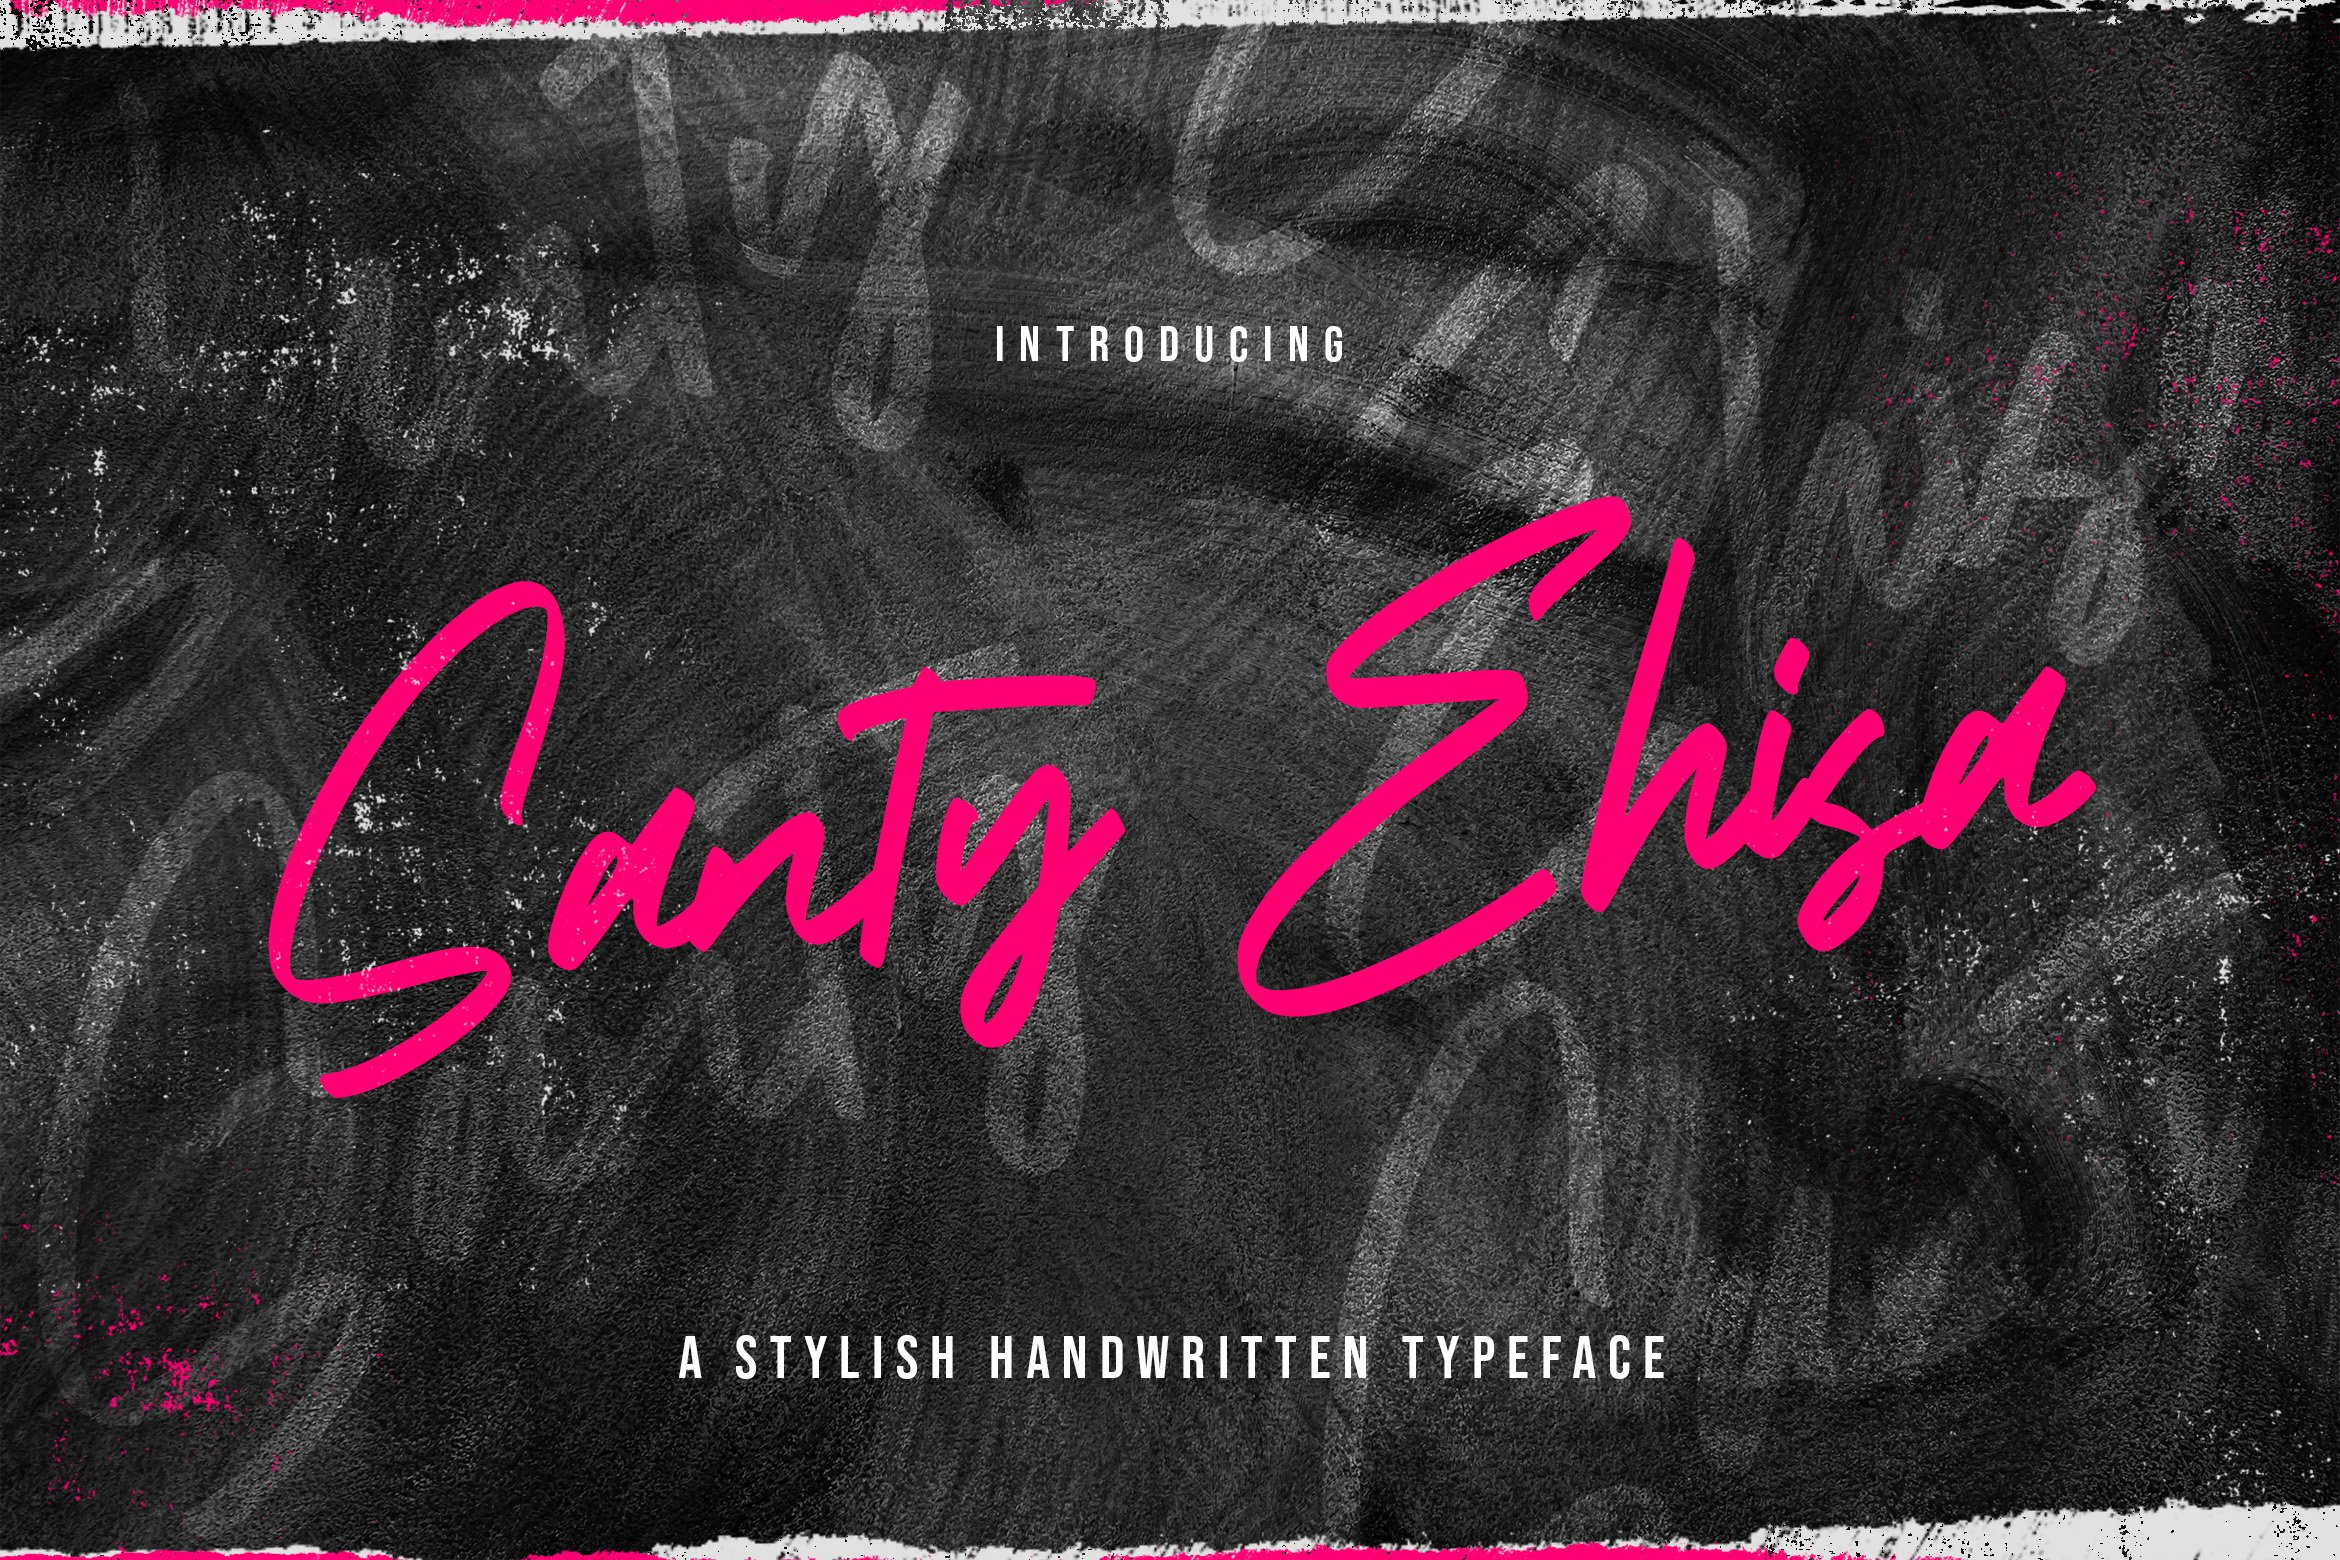 Santy Ehisa - Stylish Script Font cover image.